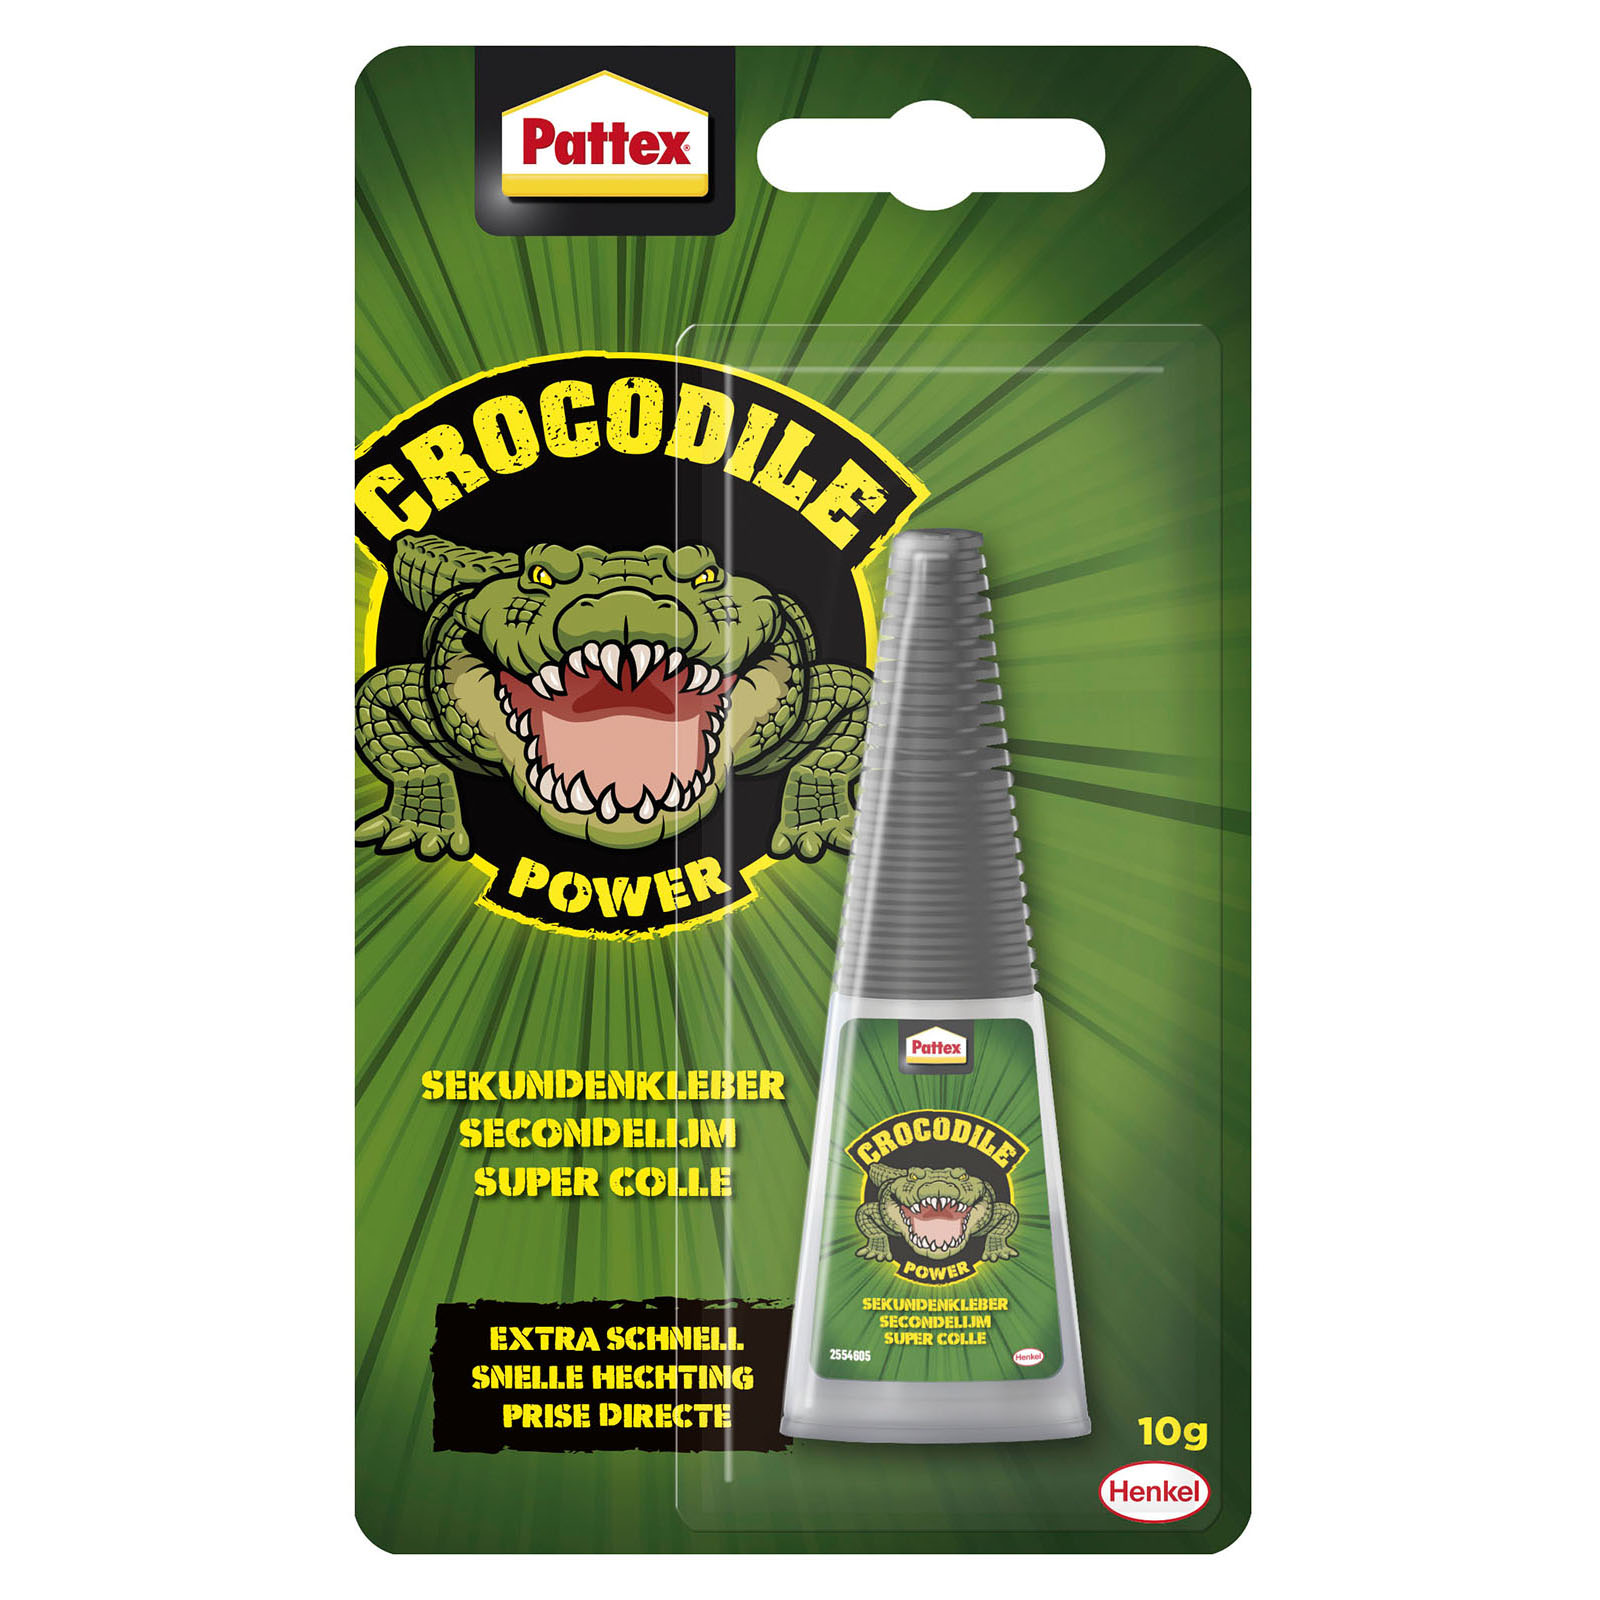 Crocodile Sekundenkleber, Transparent PATTEX Power